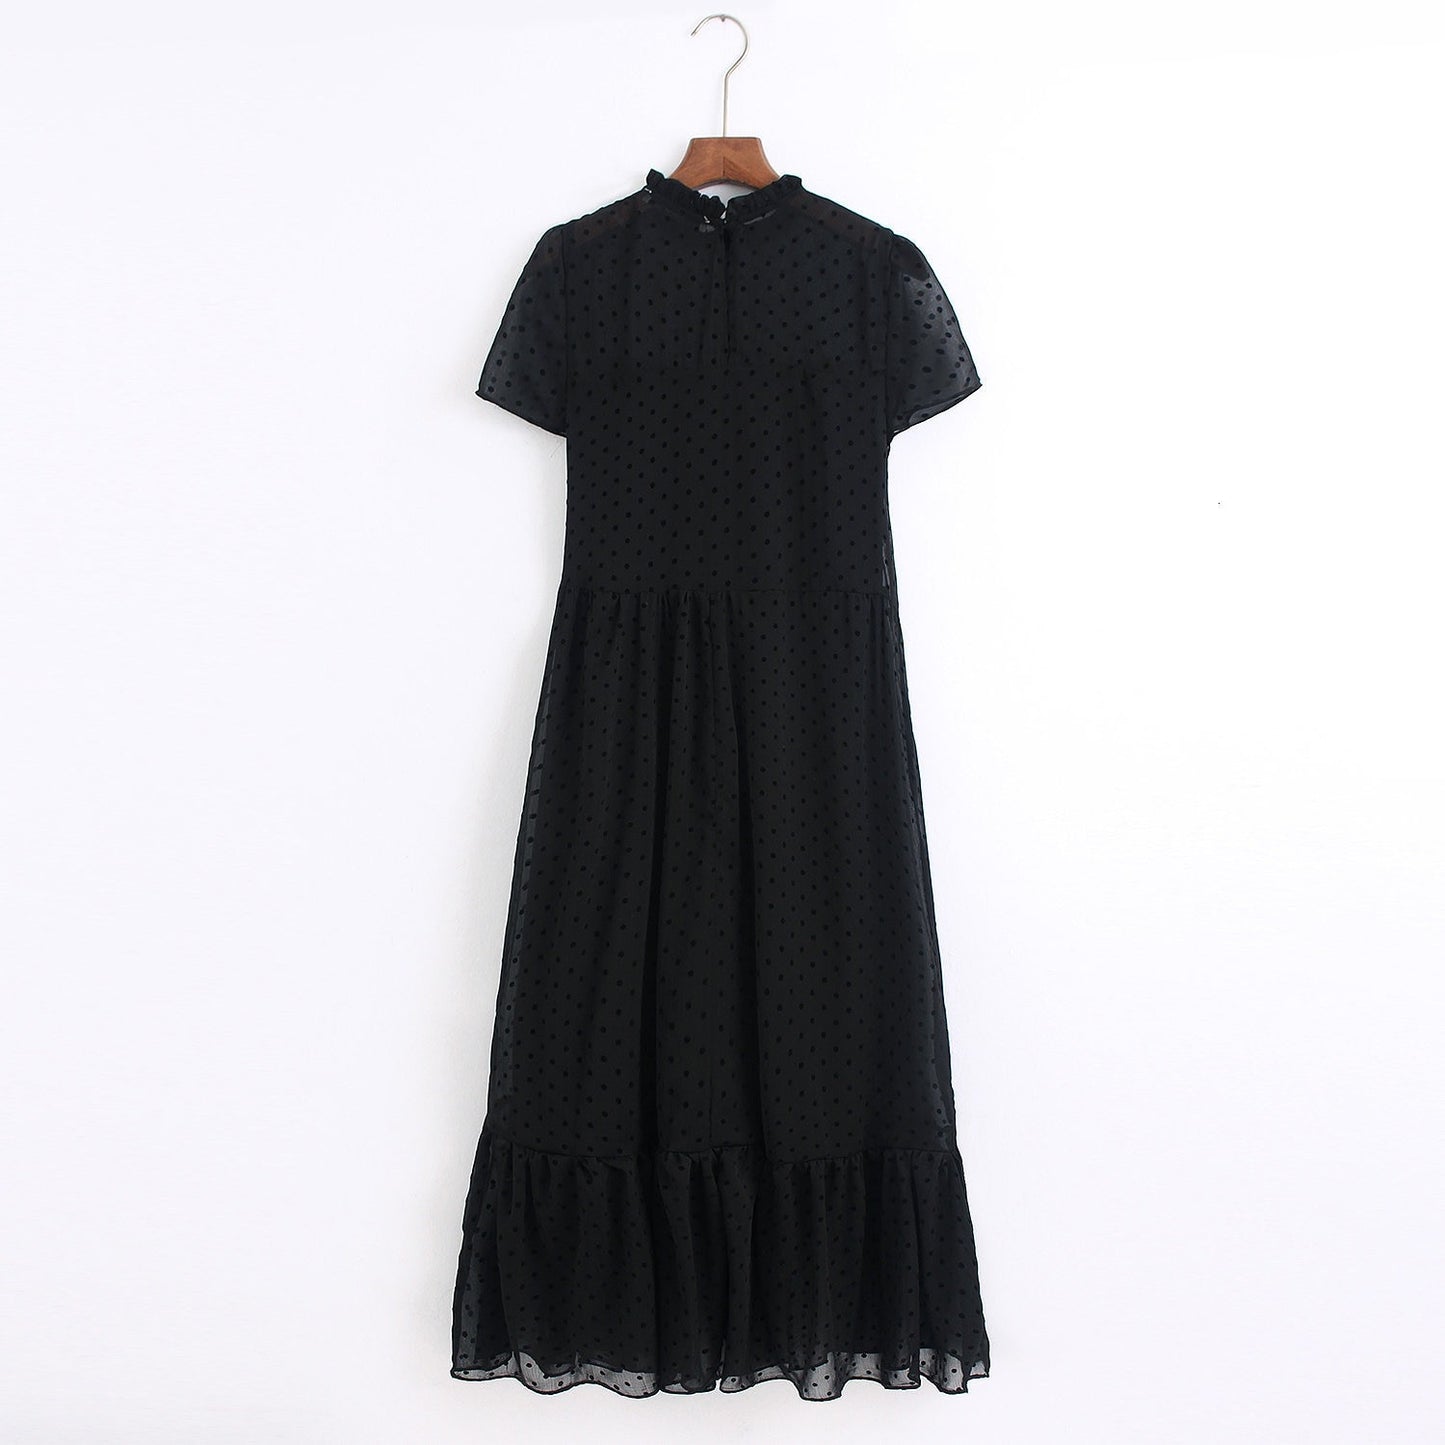 CM-DF009894 Casual Seoul Style Polka Dot Mesh Short Sleeve Long Dress - Black